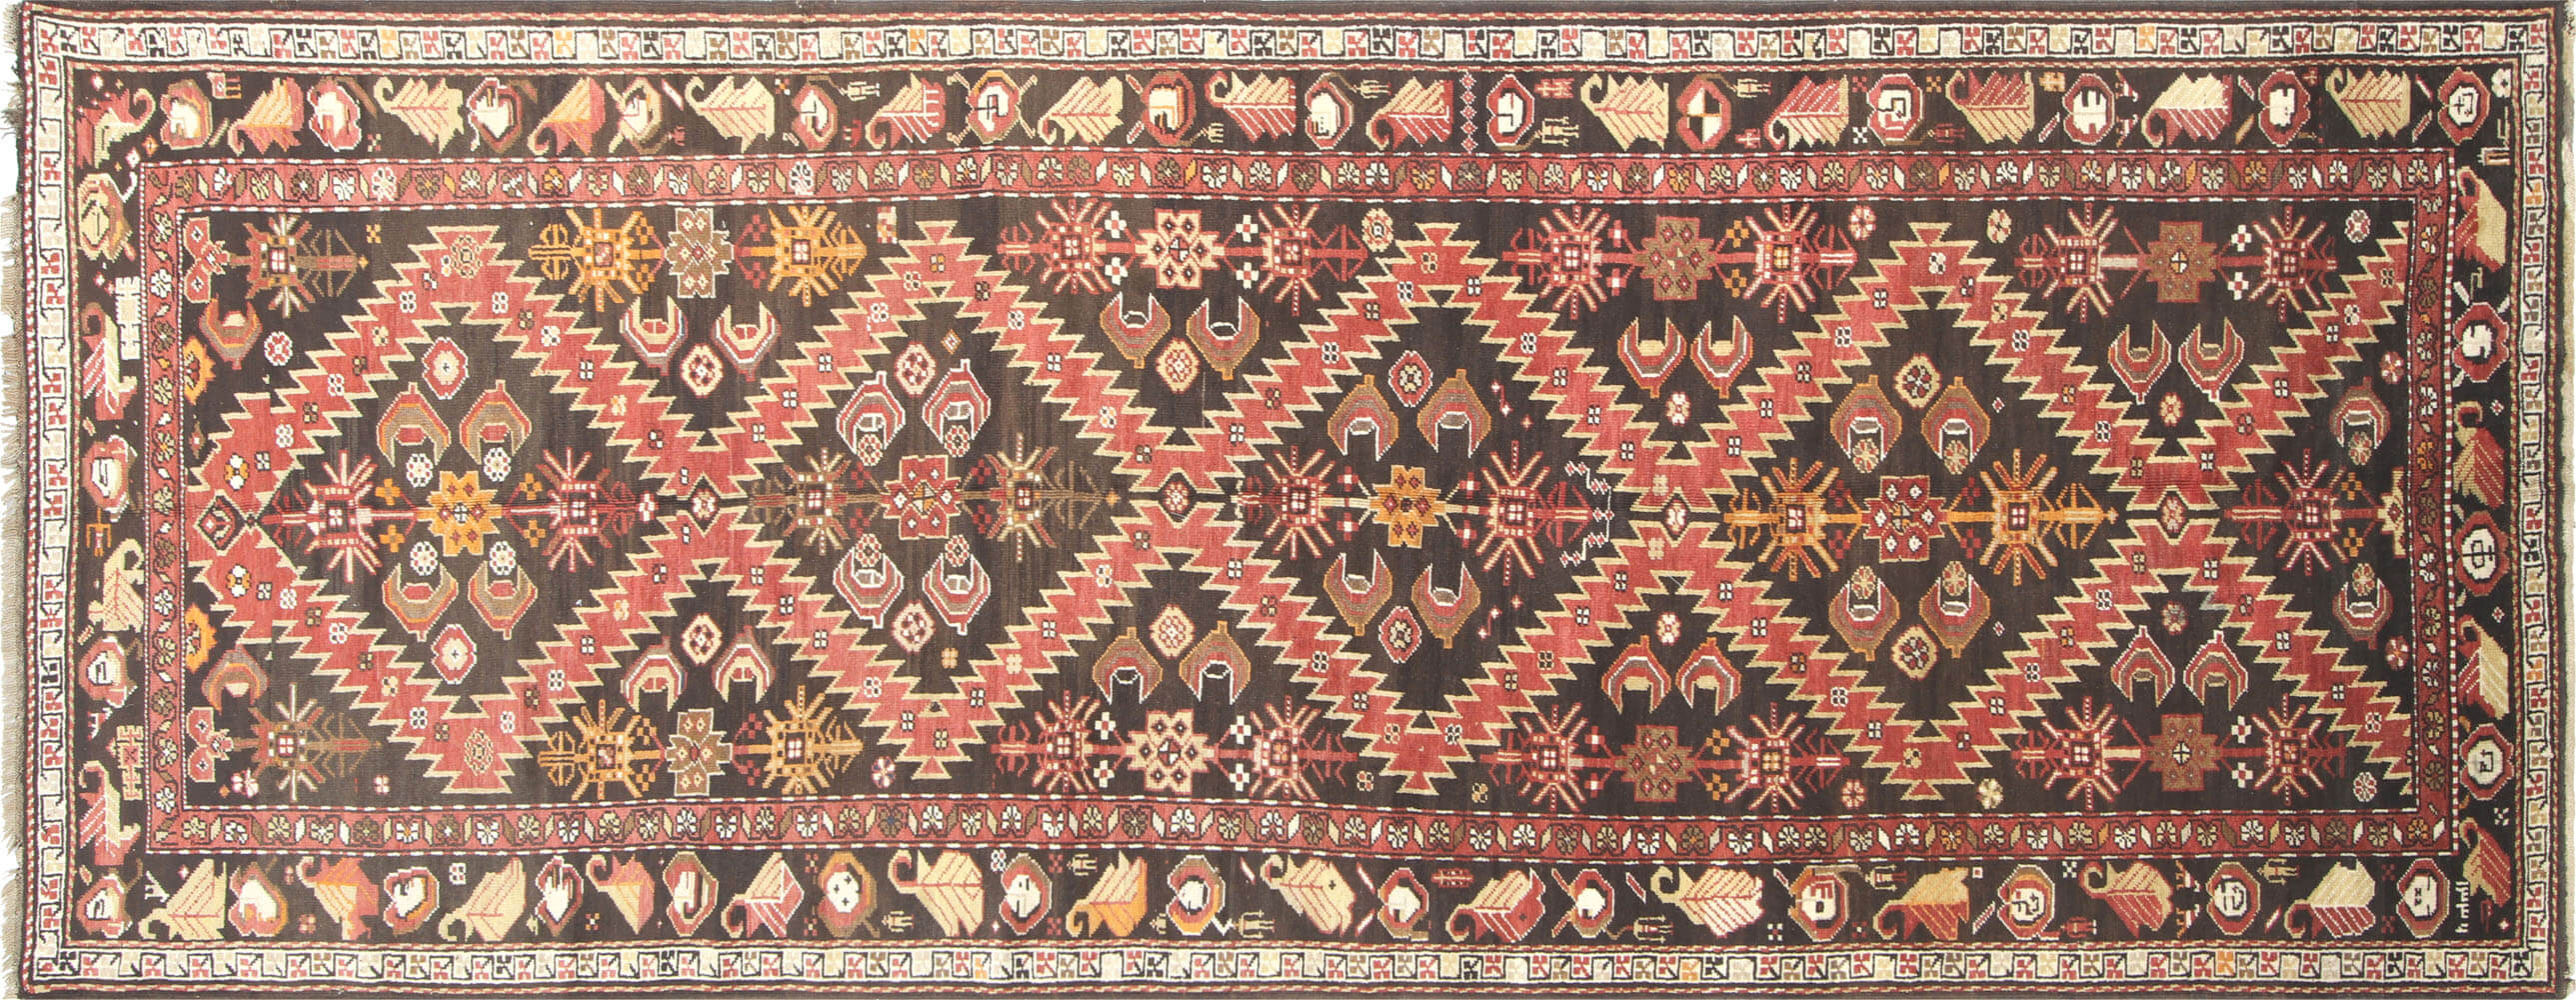 Antique Caucasian Karabagh Carpet - 5'7" x 14'3"